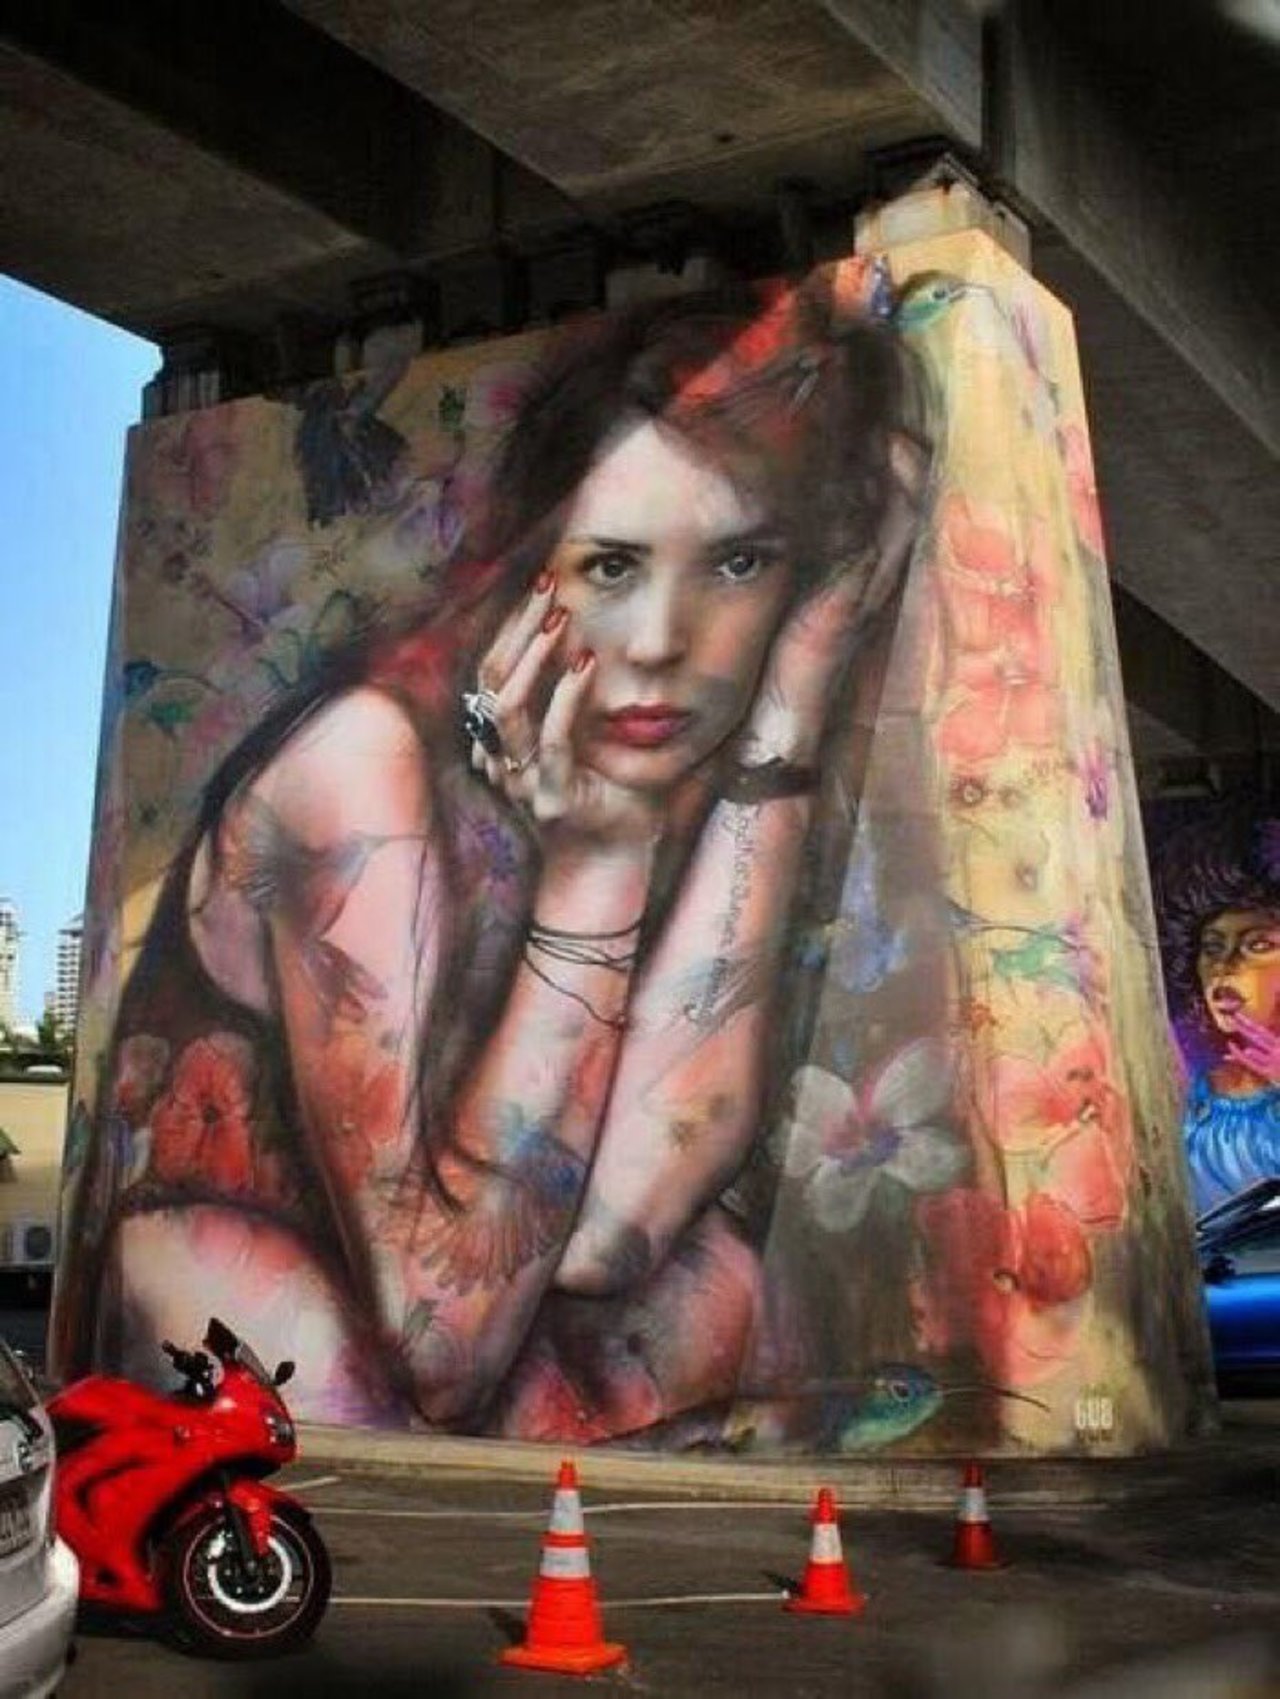 #mural by Gus Eagleton #Brisbane #Australia #Streetart #urbanart #graffiti #art https://t.co/PfMX2pAbAe